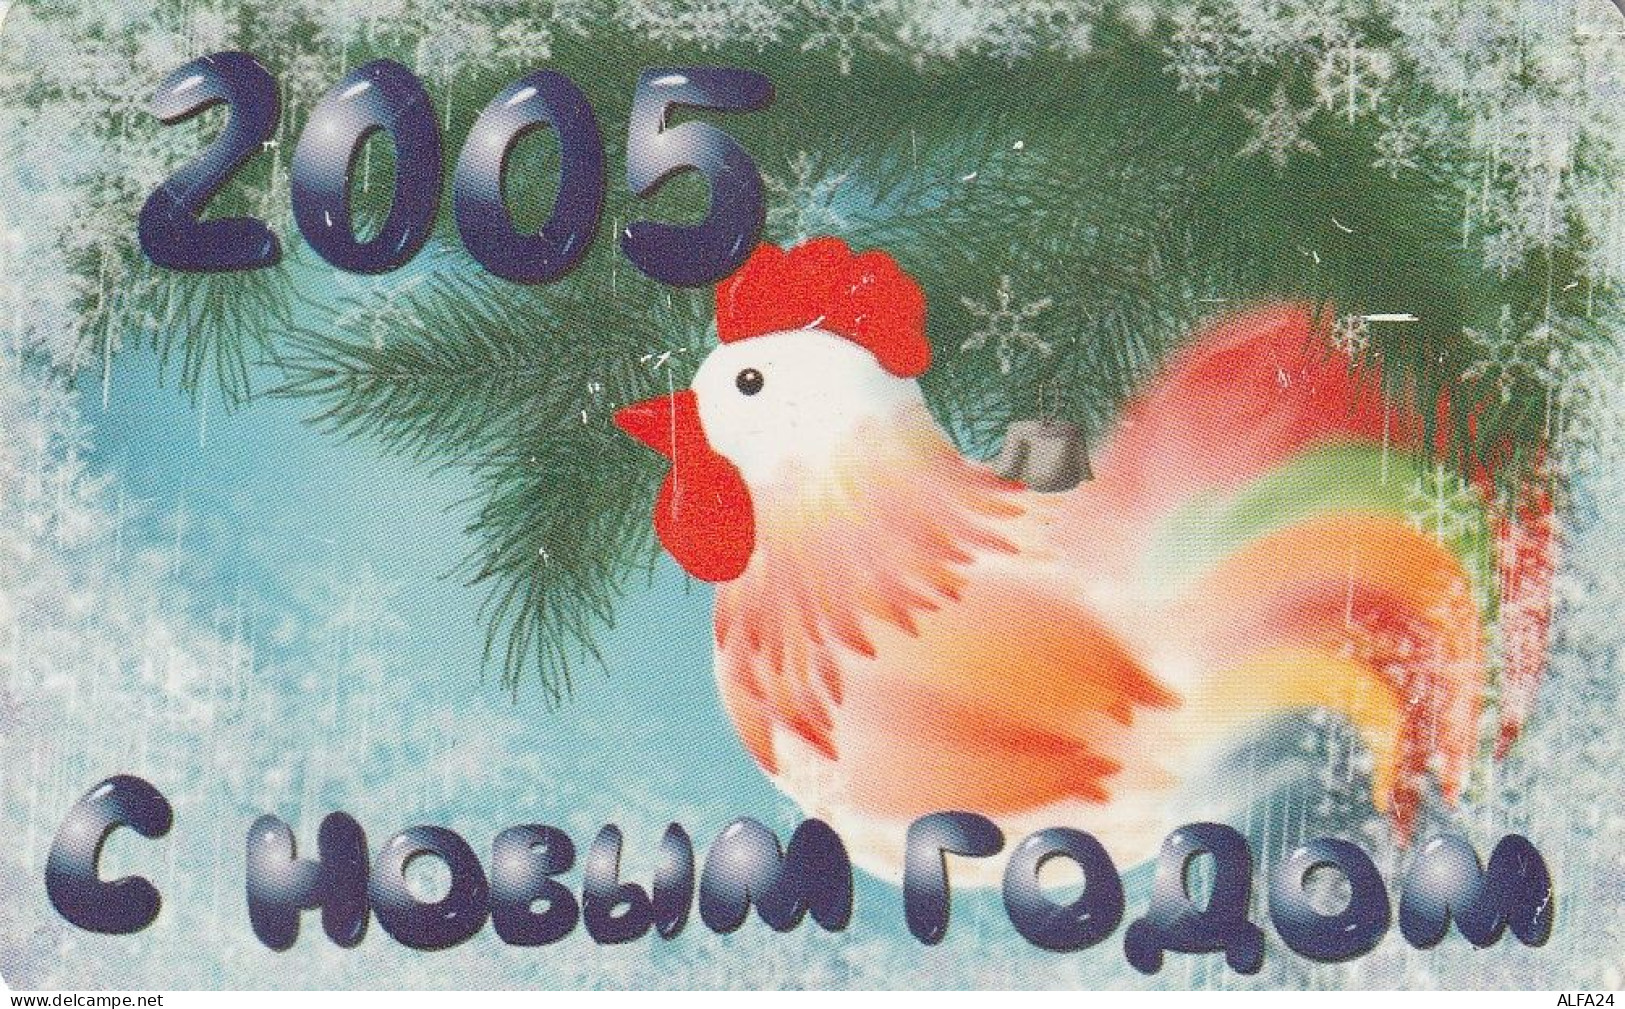 PHONE CARD RUSSIA Bashinformsvyaz - Ufa (E10.2.2 - Russland